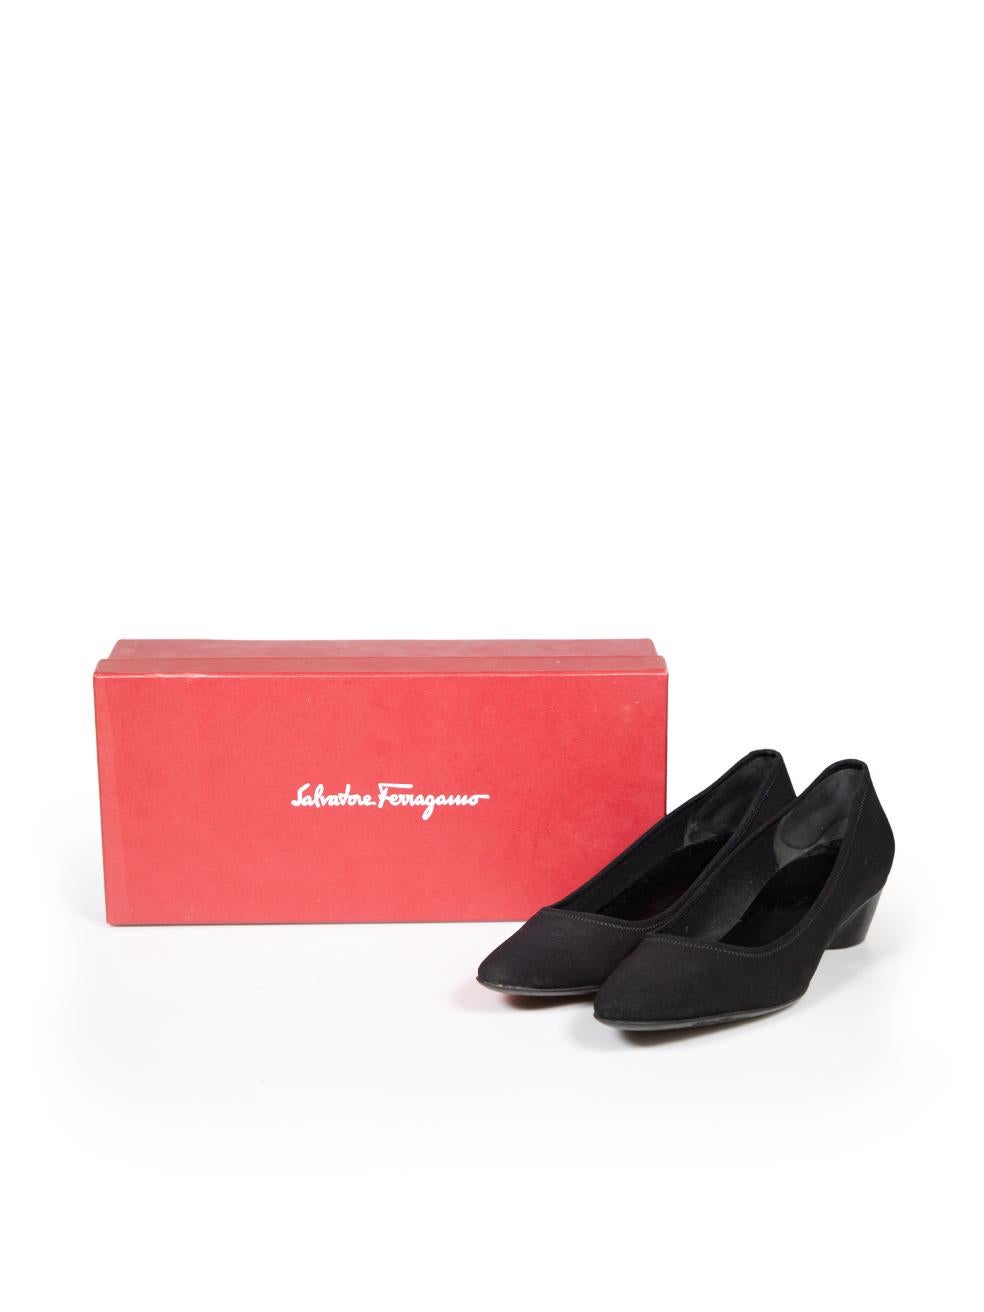 Salvatore Ferragamo Black Balmy Wedge Heel Size US 7.5 For Sale 2